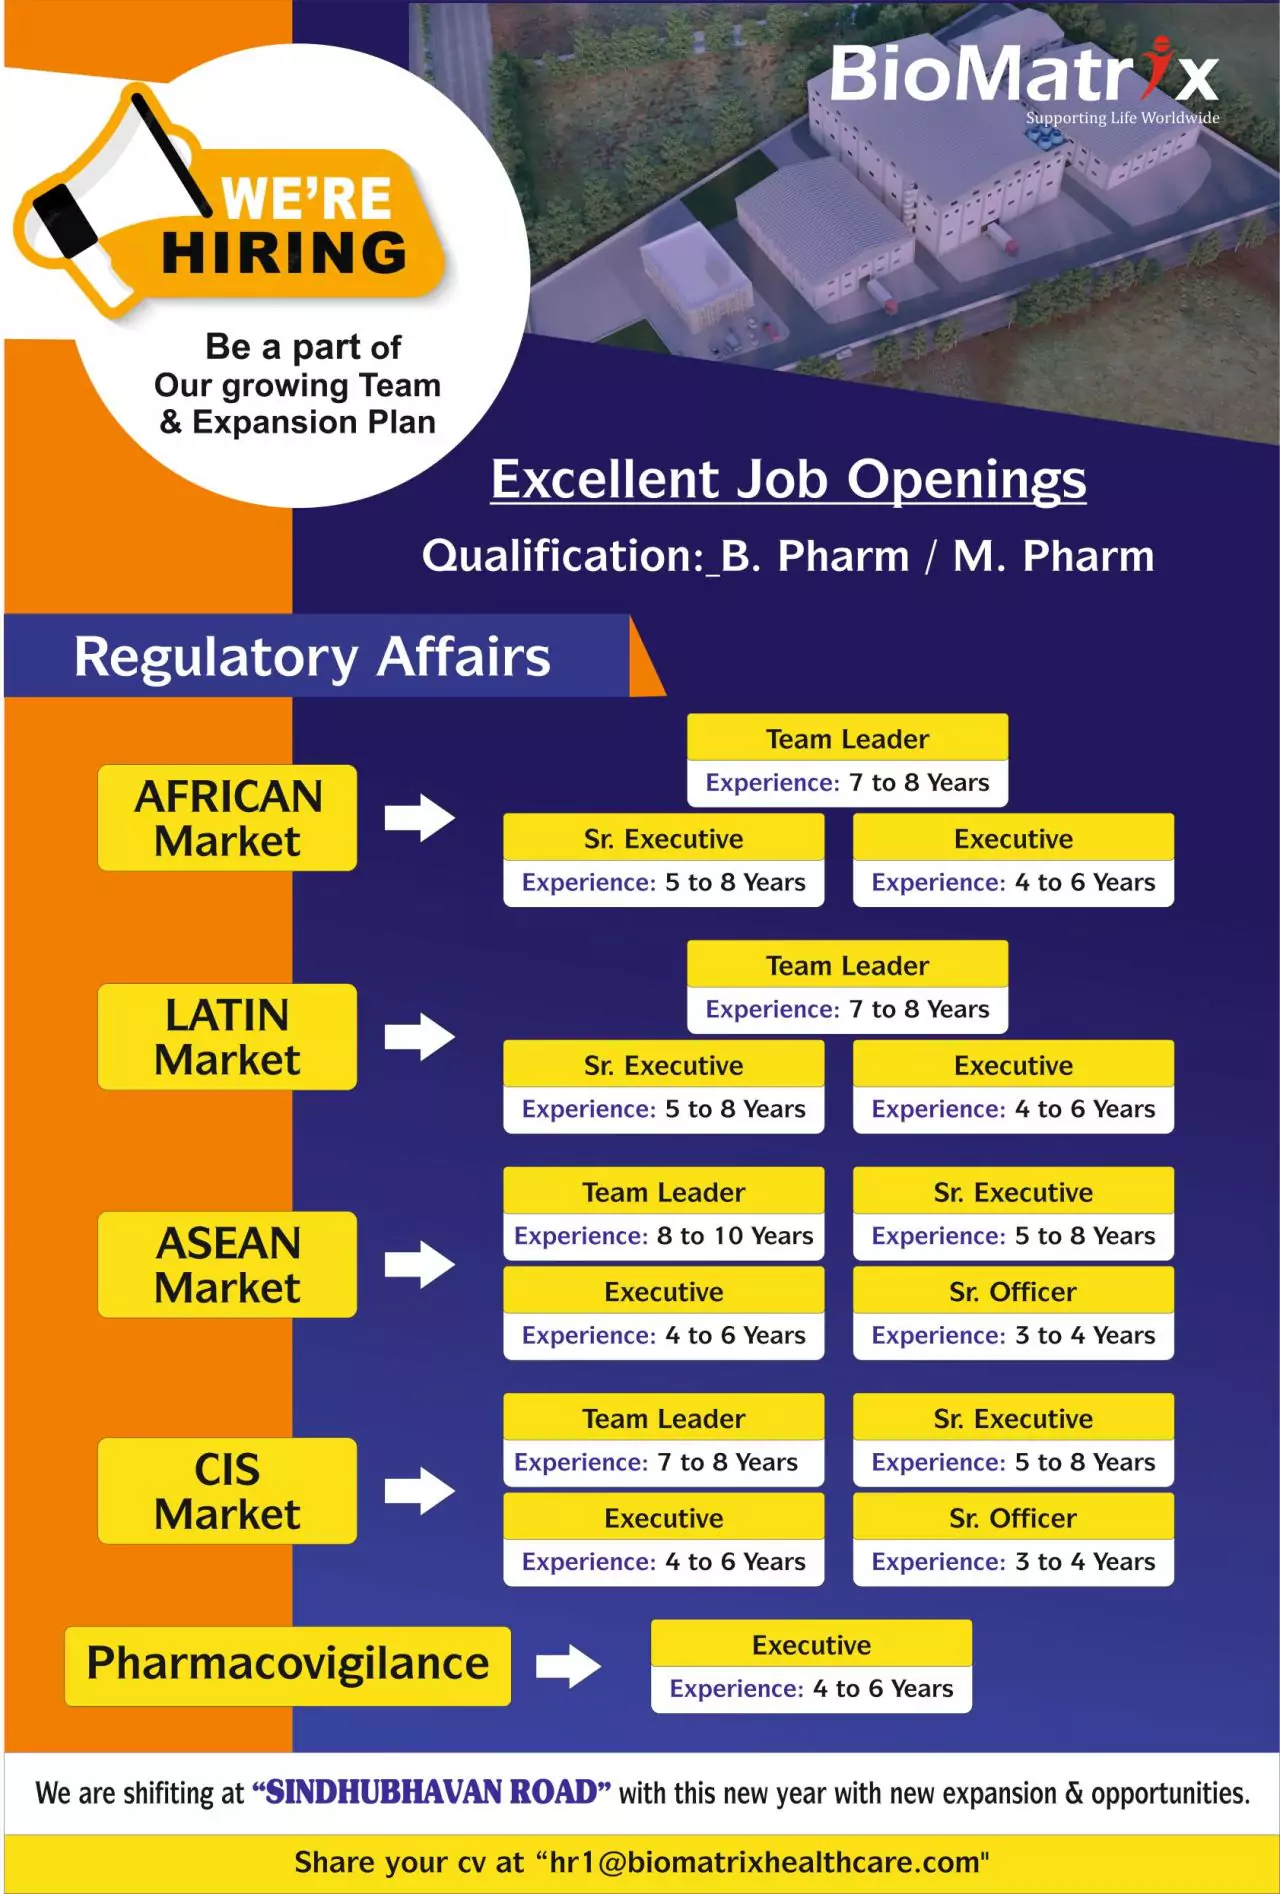 BioMatrix jobs - regulatory affairs and pharmacovigilance